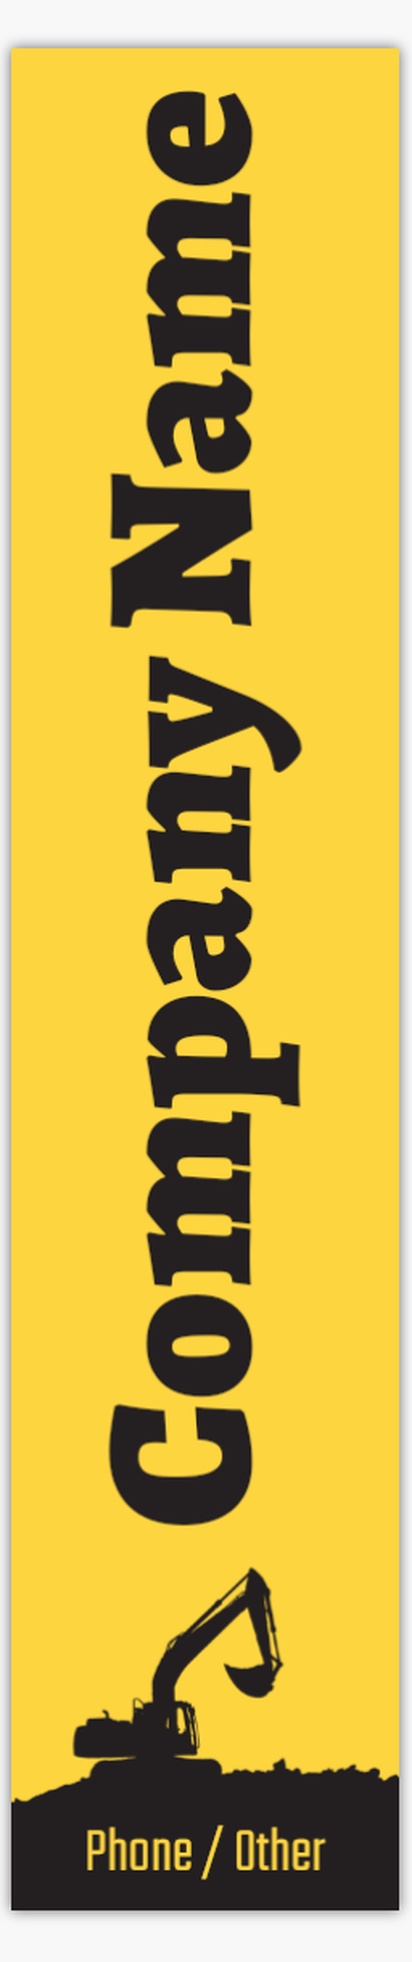 Design Preview for Design Gallery: Demolition Vinyl Banners, 76 x 366 cm